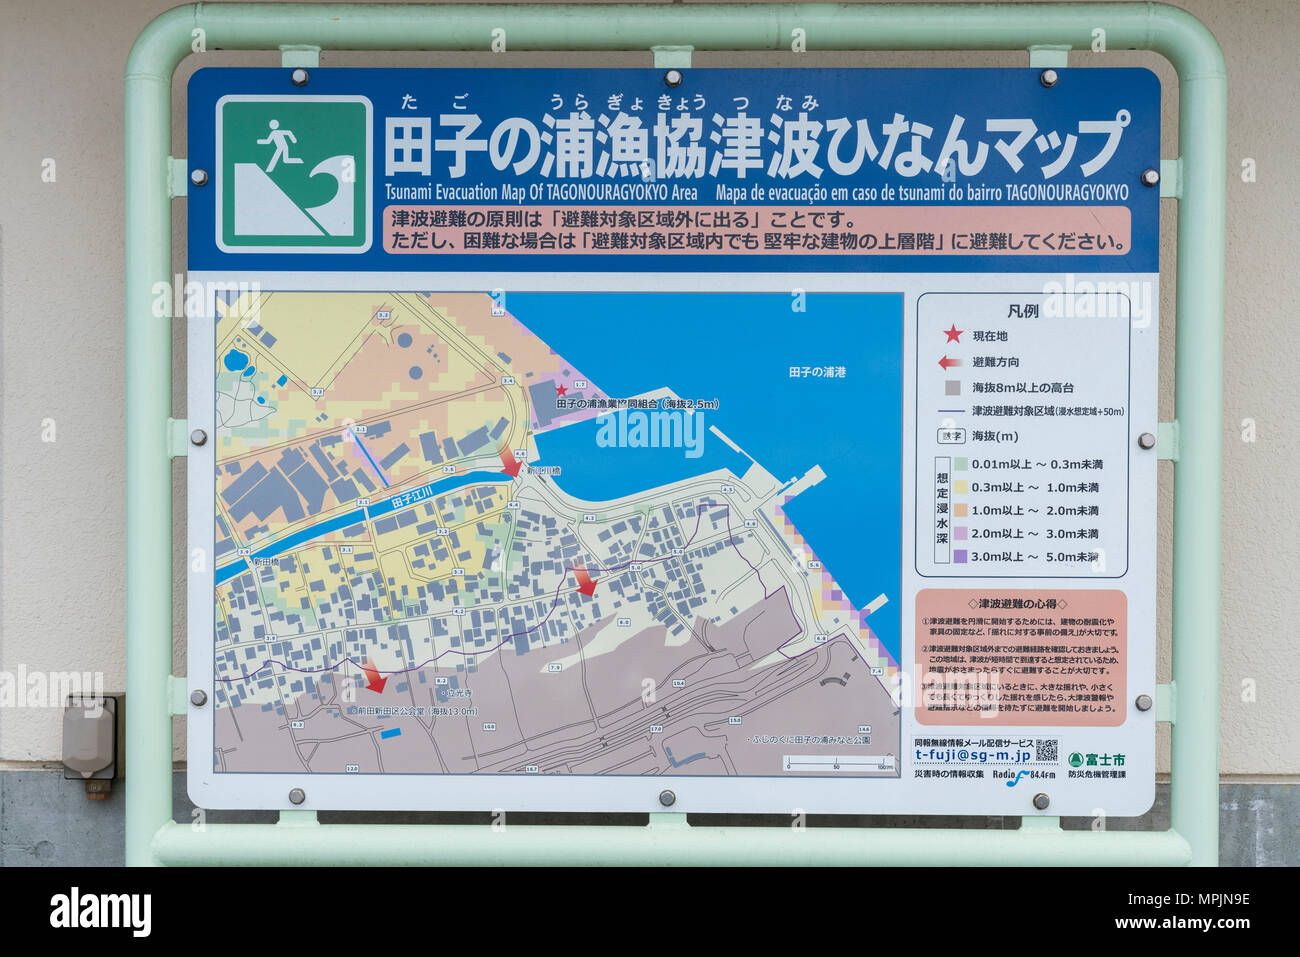 Tsunami Evacuation Map, Tagonoura, Fuji City, Shizuoka Prefecture, Japan Stock Photo